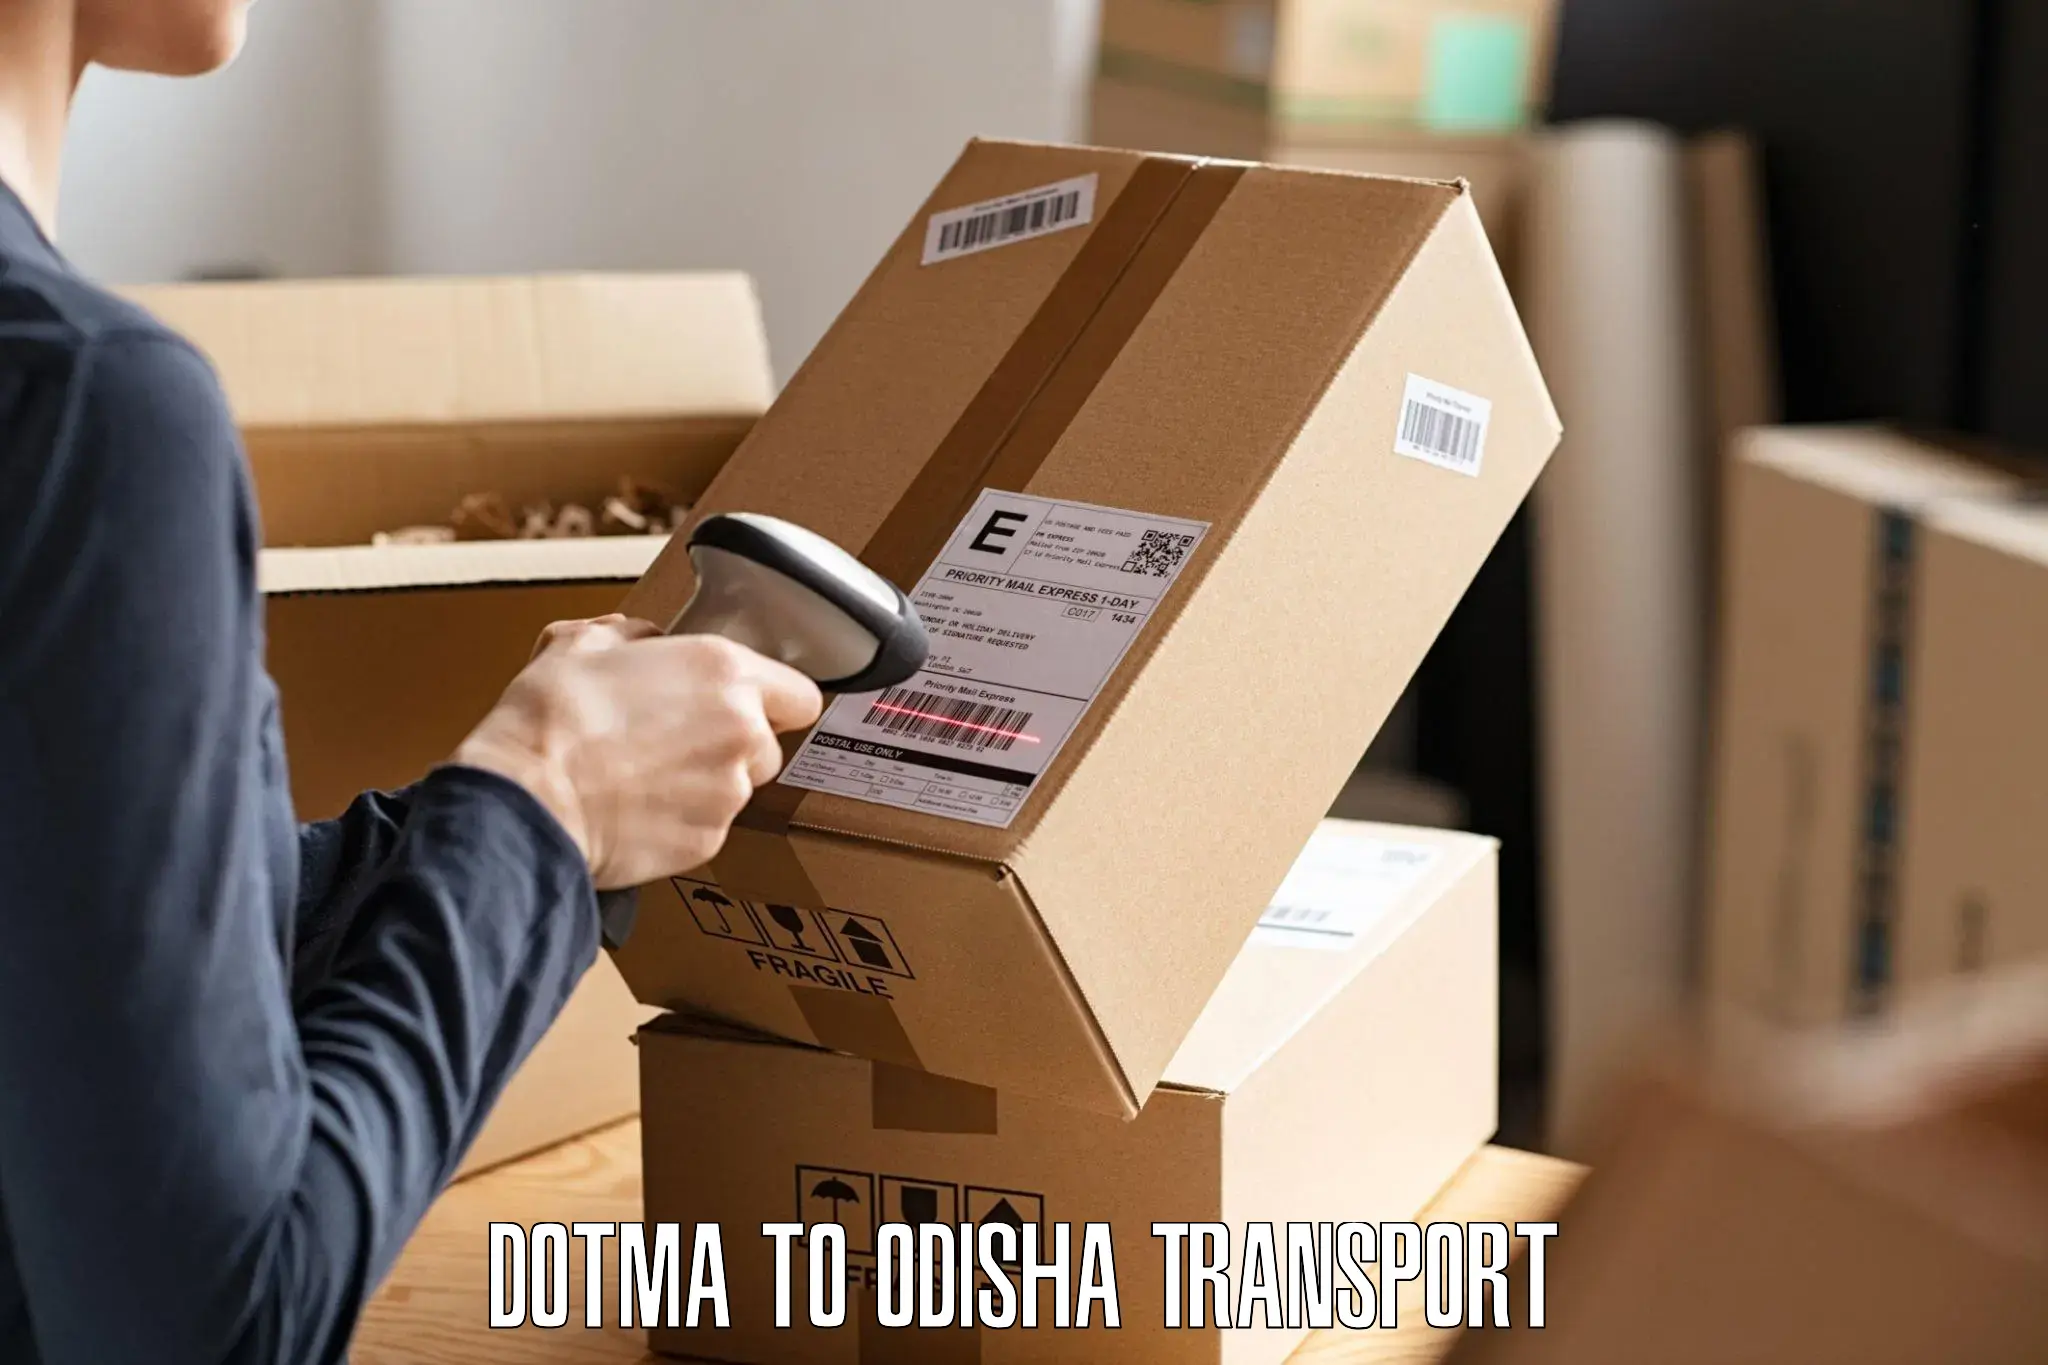 Daily transport service Dotma to Turanga